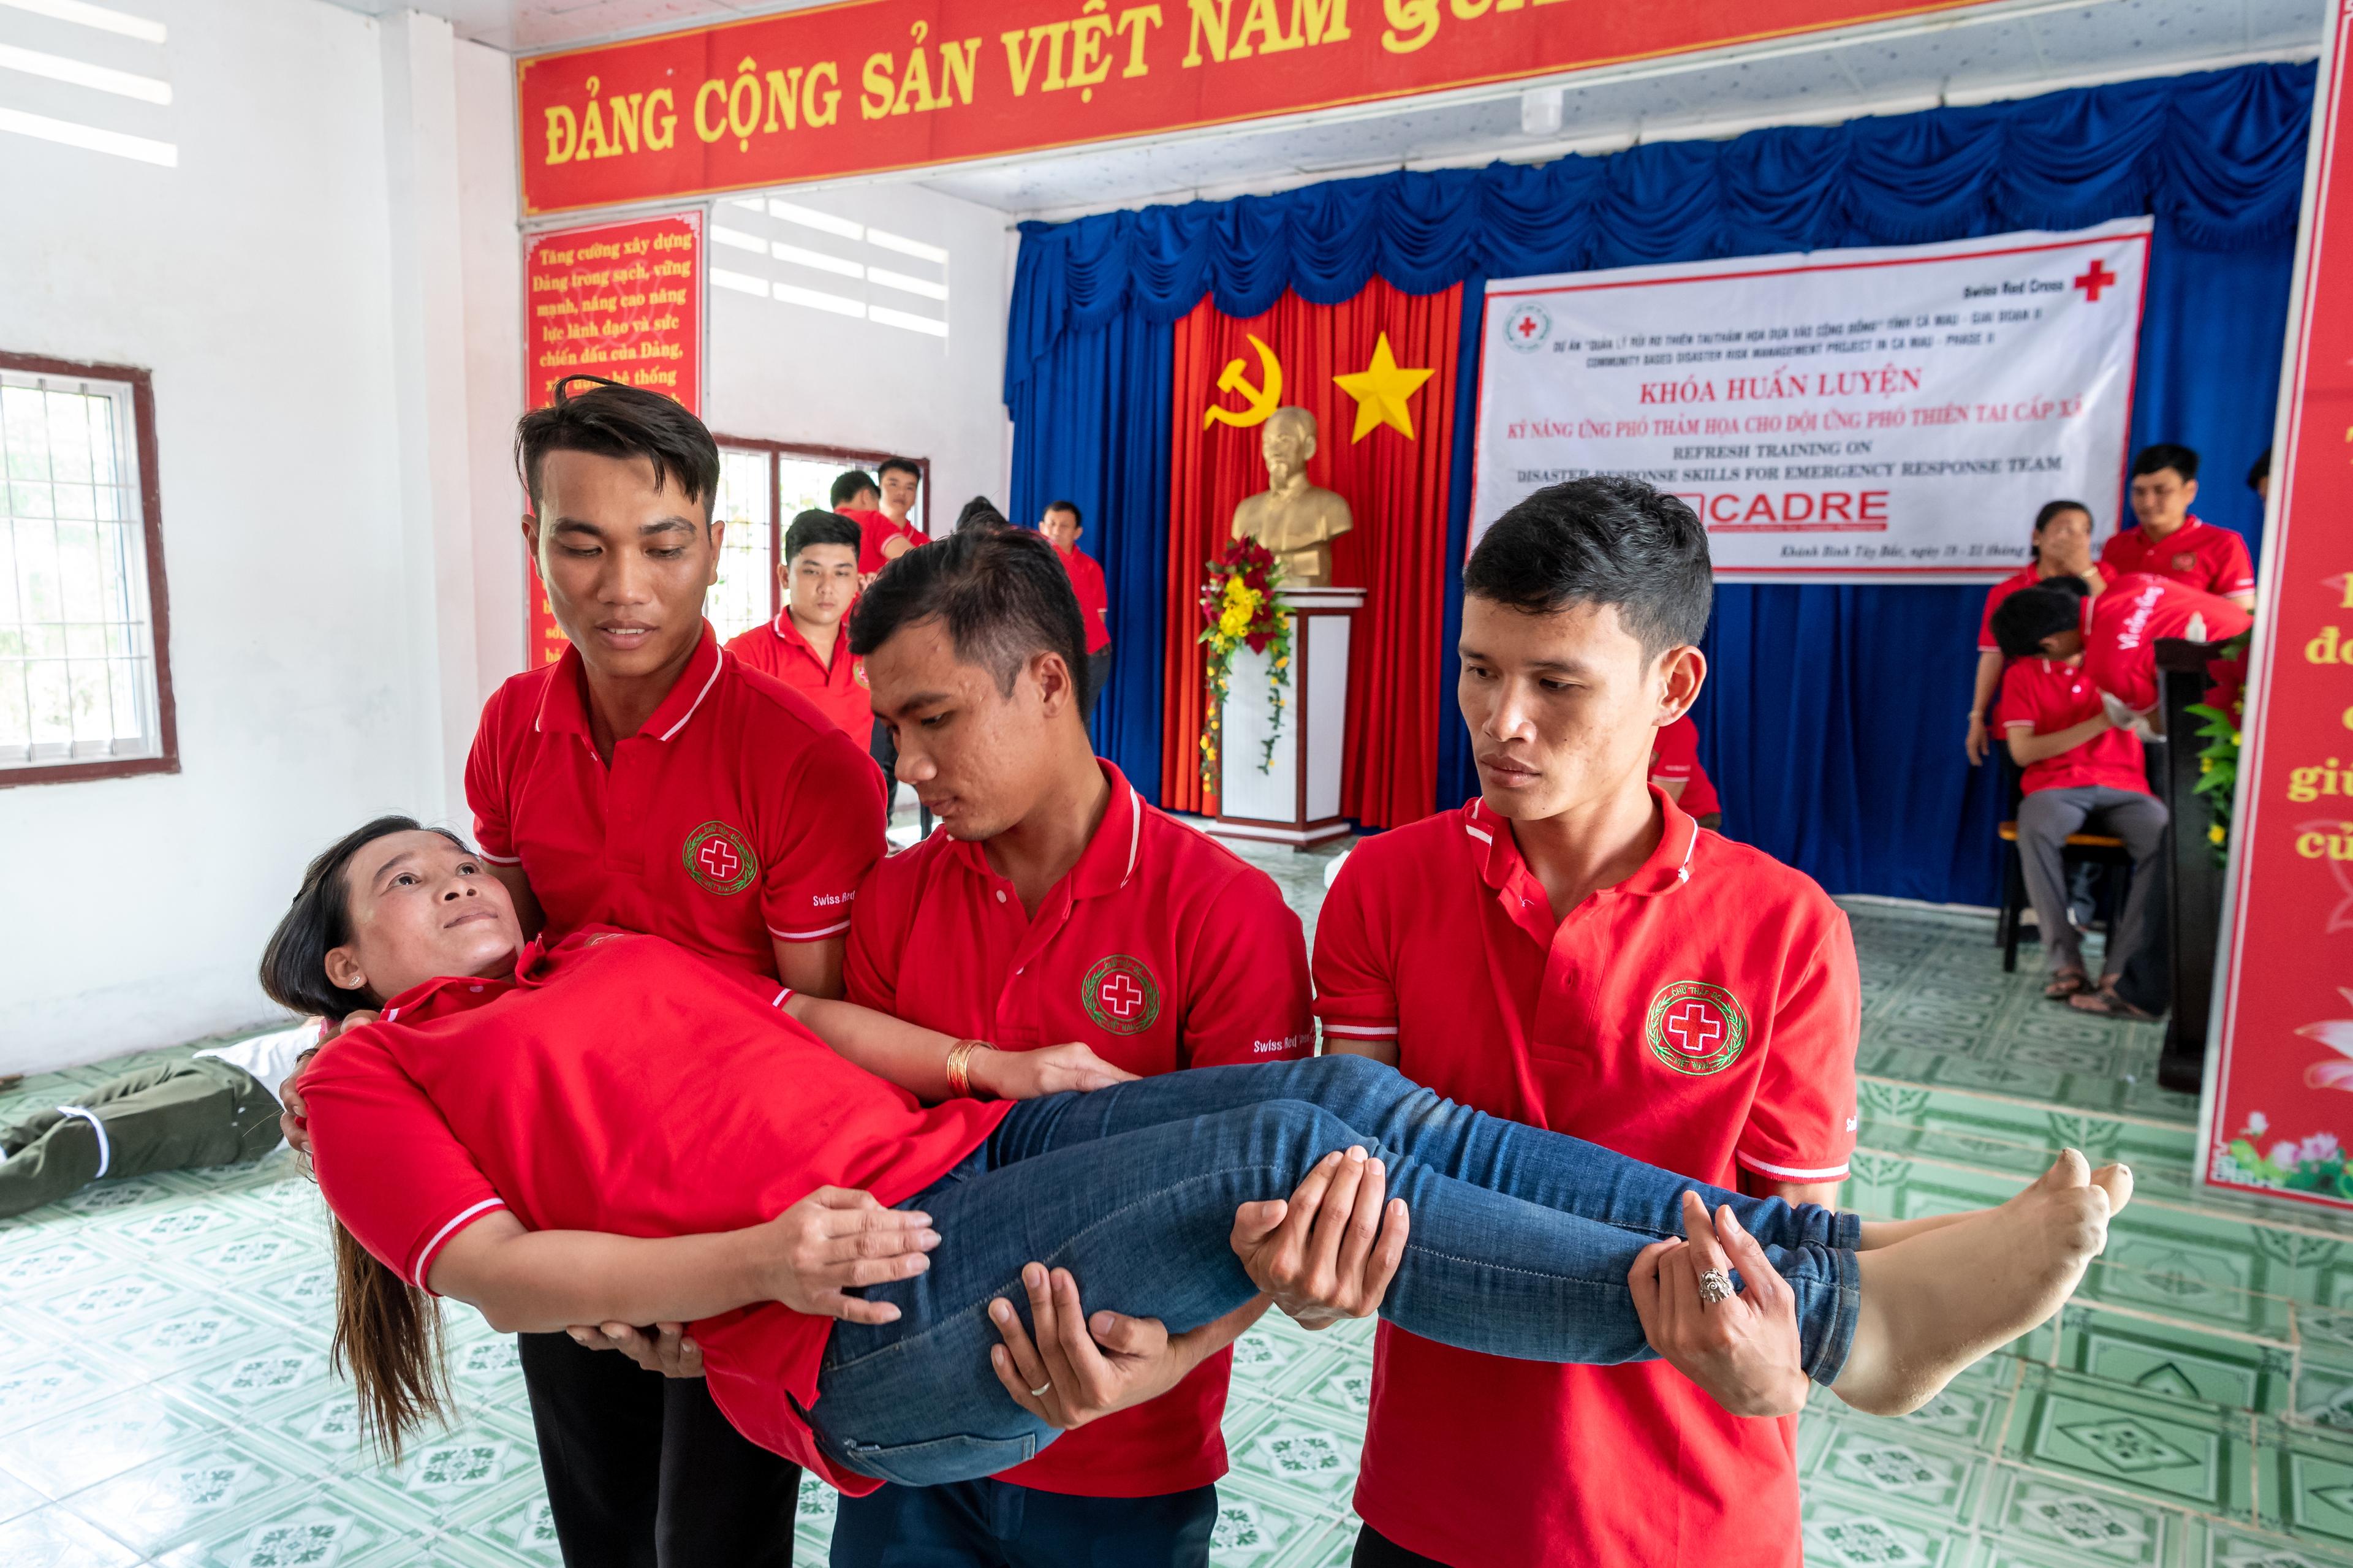 Erste-Hilfe-Übung des Roten Kreuzes in Vietnam